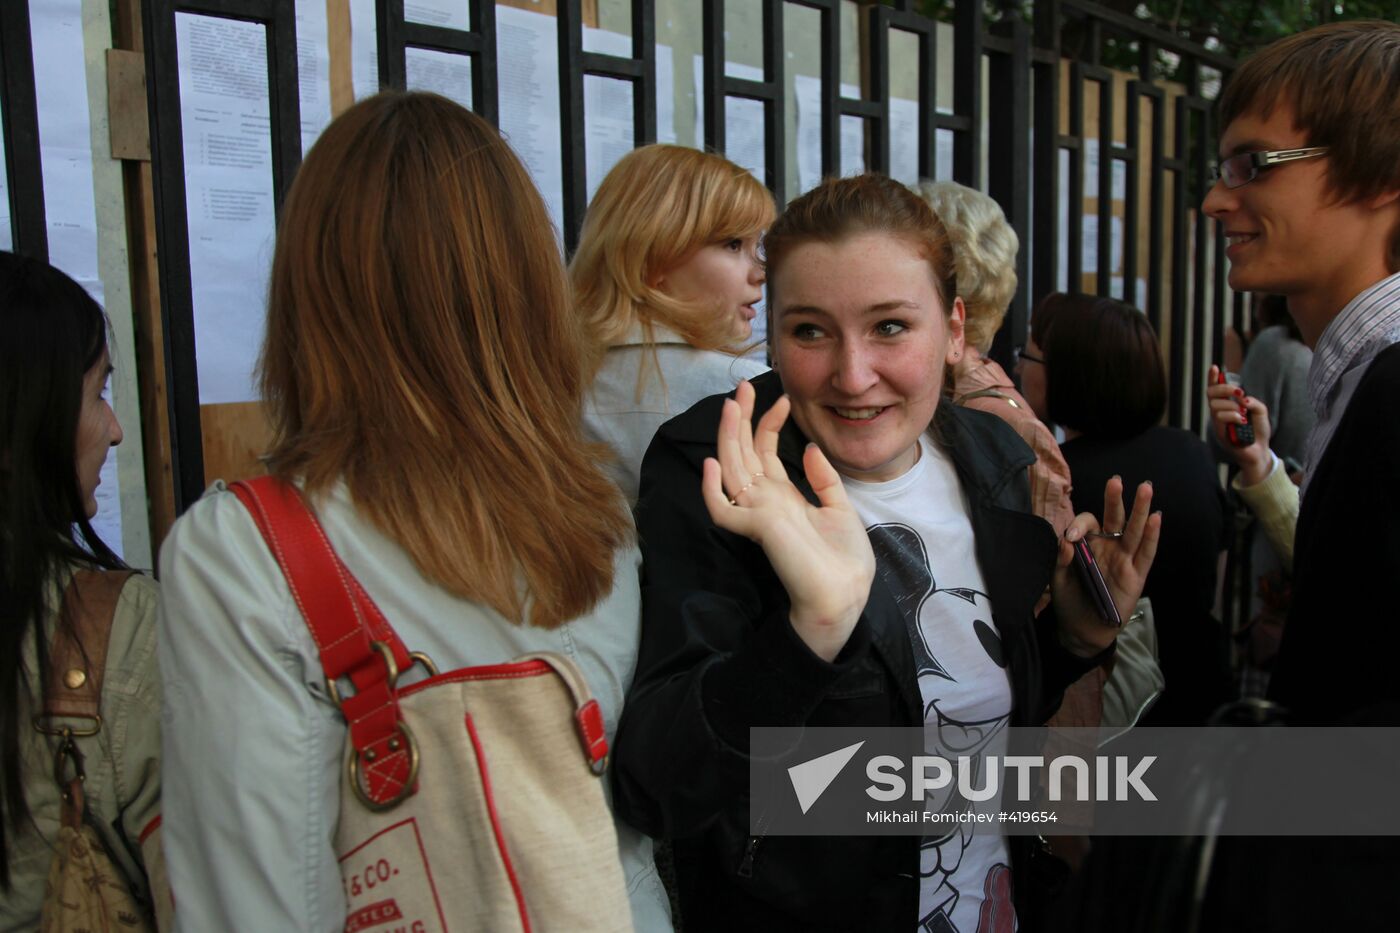 Moscow Linguistic University enrolls students